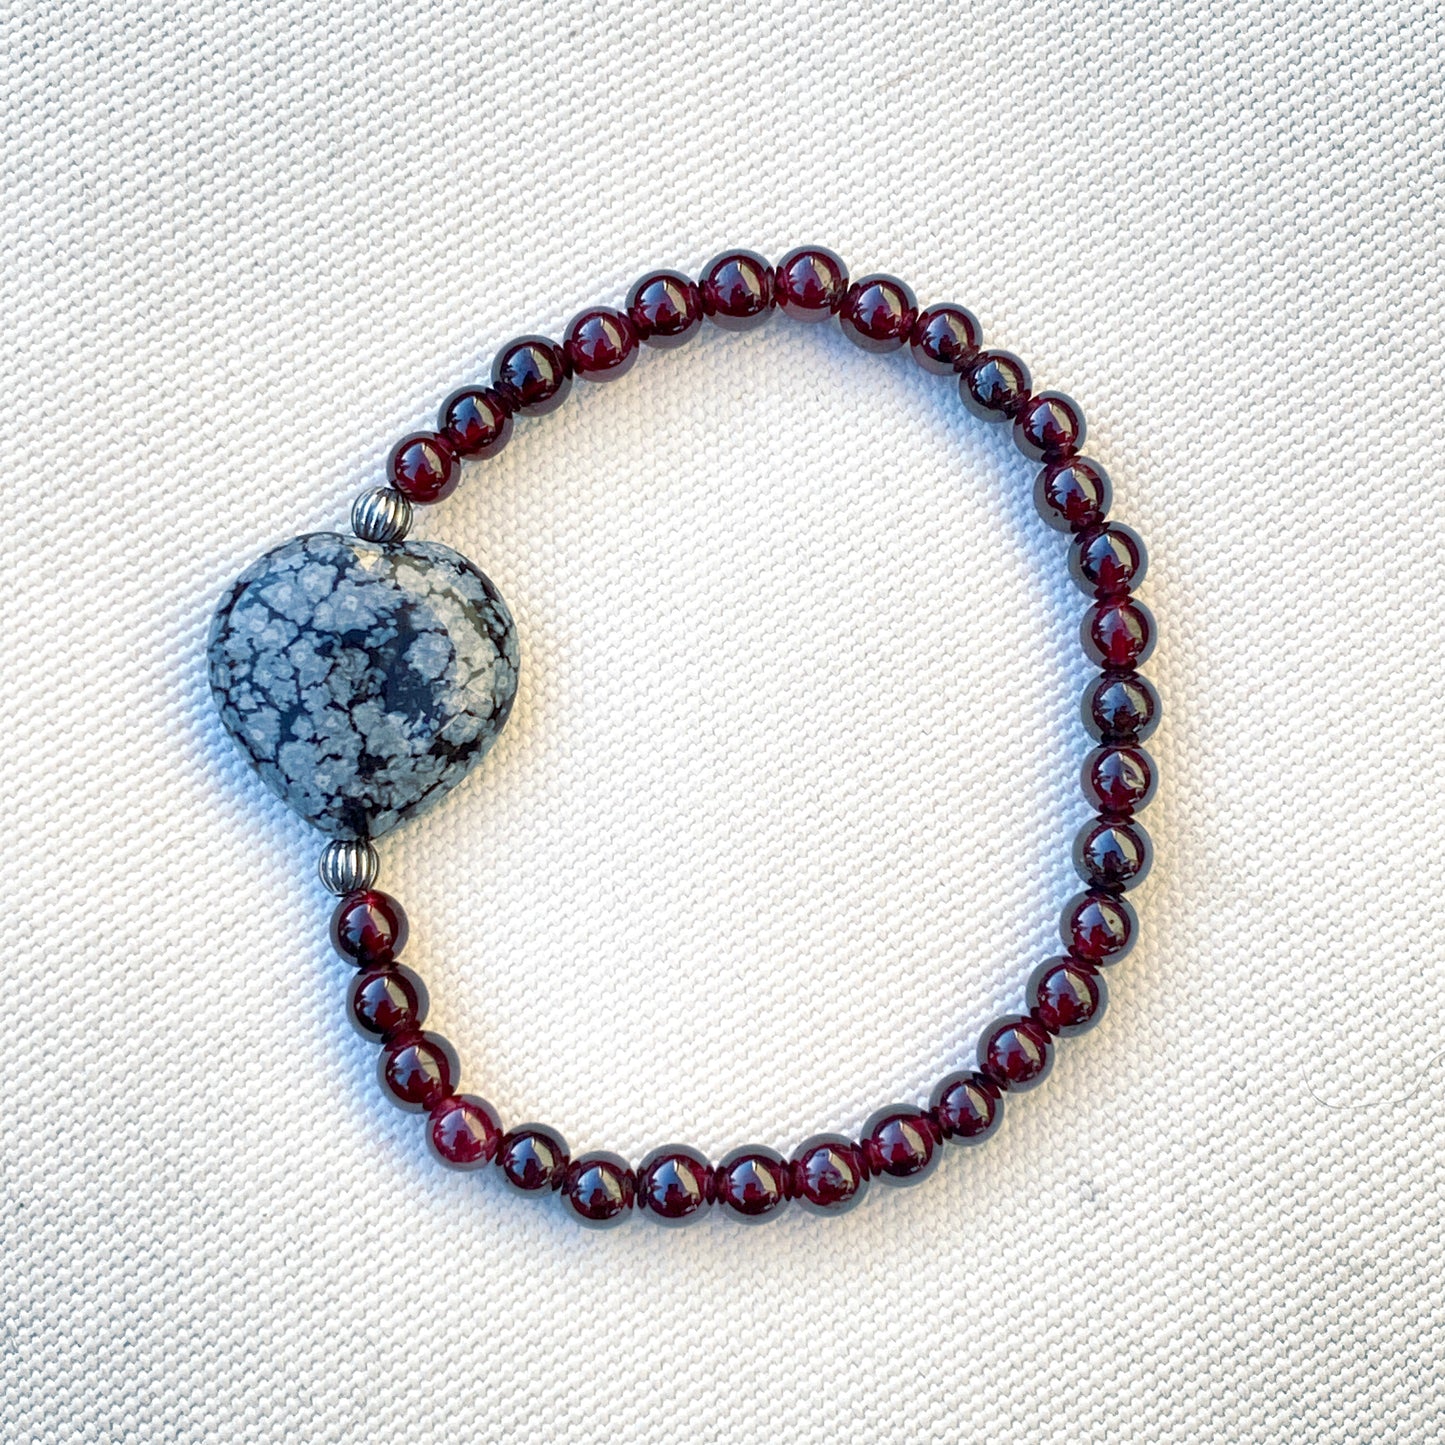 Garnet gemstones, Snowflake Obsidian Heart, and Sterling Silver Stretch Bracelet